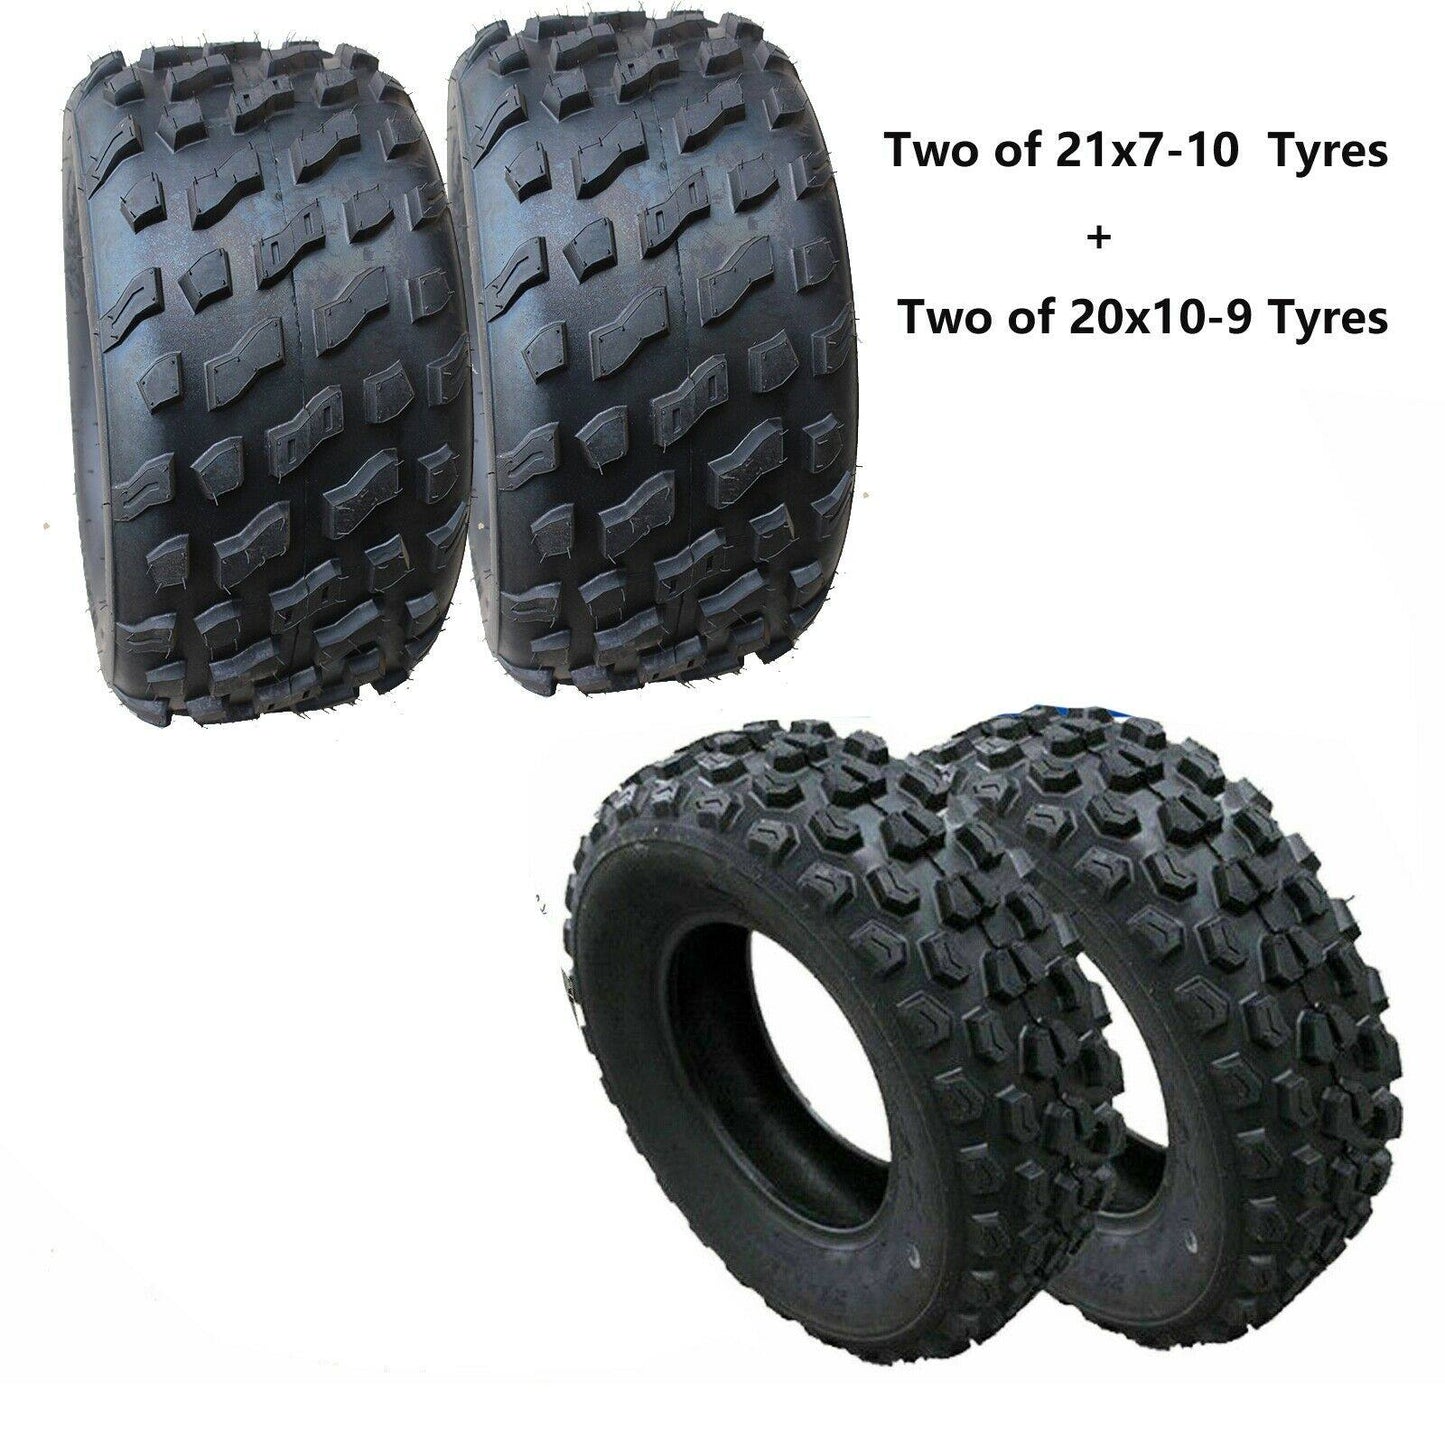 Pair of 20x10-9" & 21x7-10" Tyres For 200cc 250cc ATV Quad Buggy - TDRMOTO